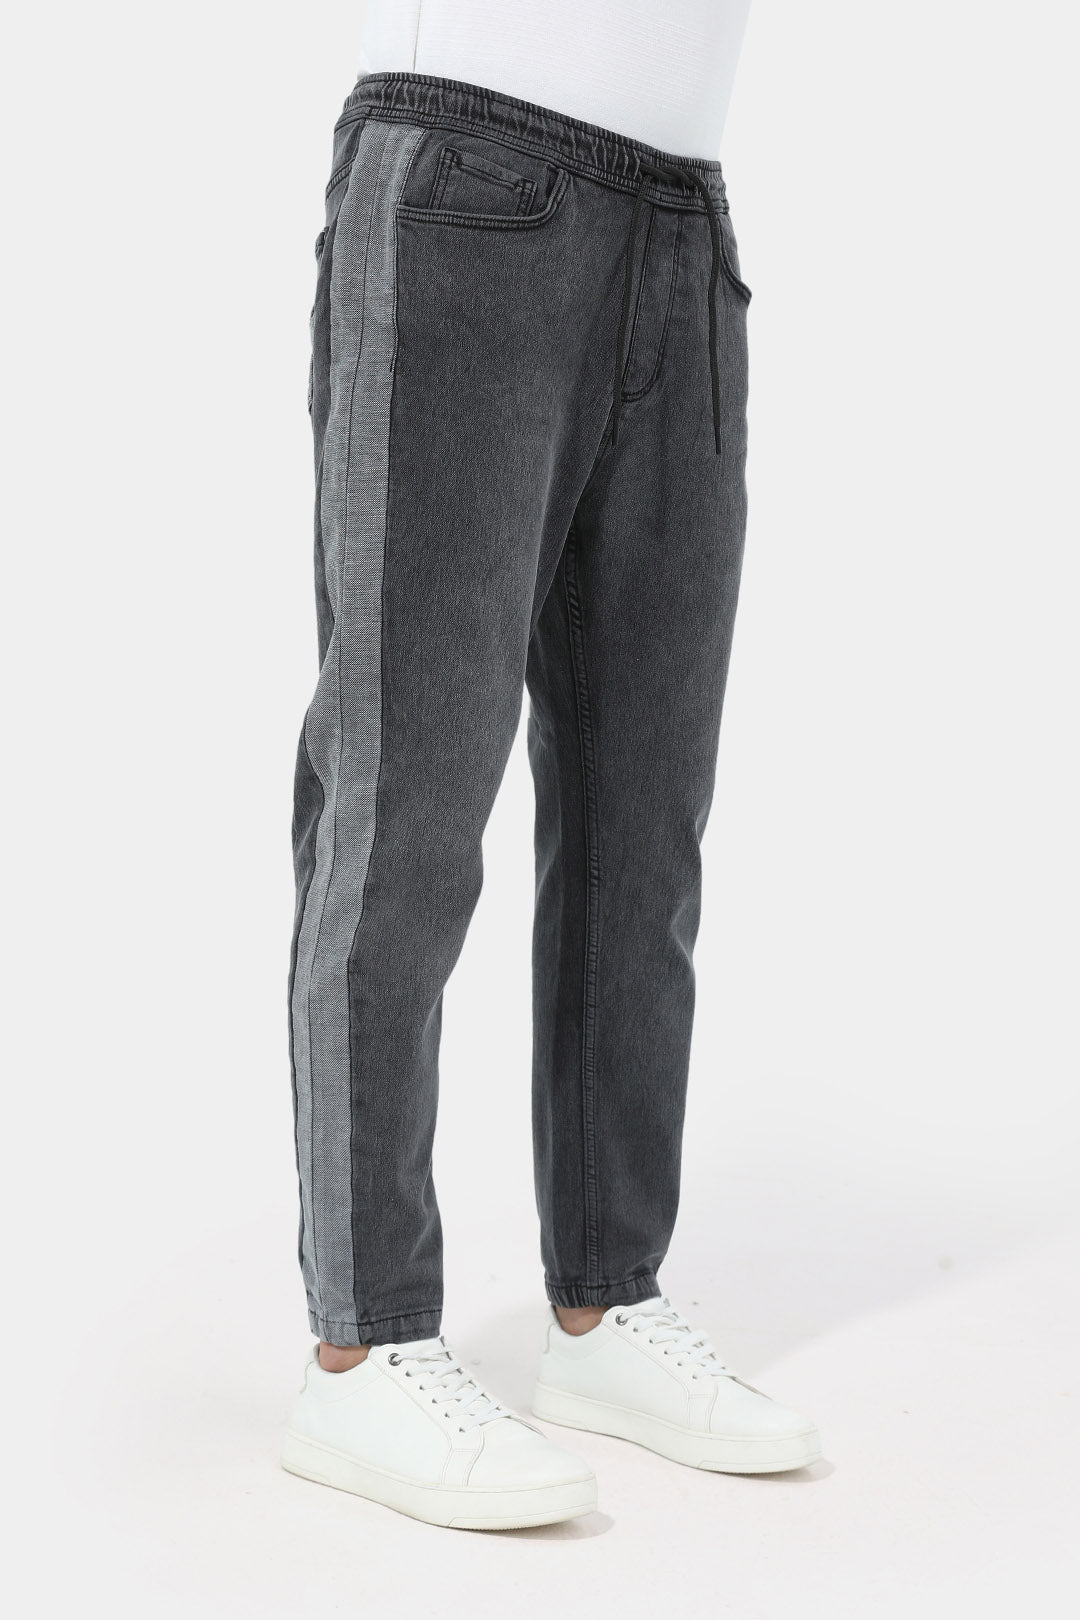 grey slim fit jean pants